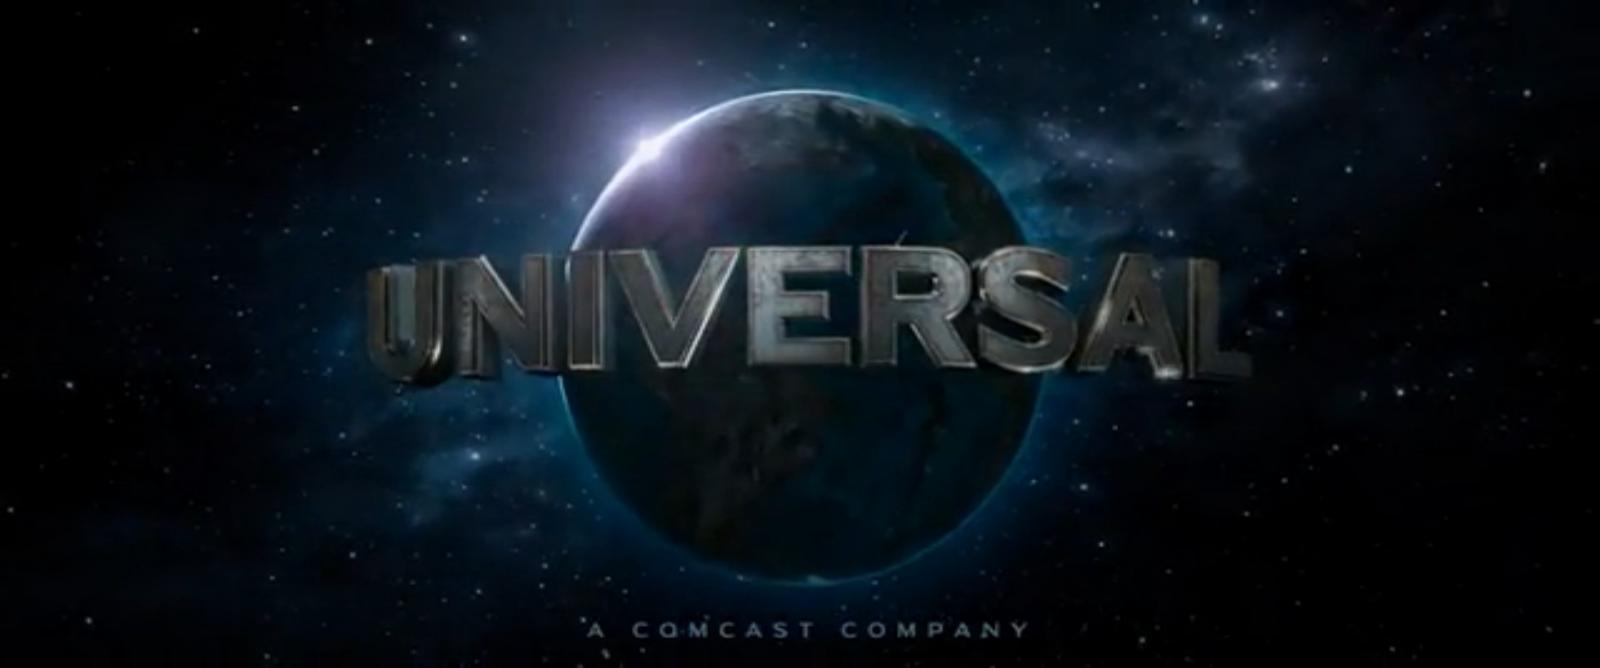 Universal Pictures - Oblivion (2013)